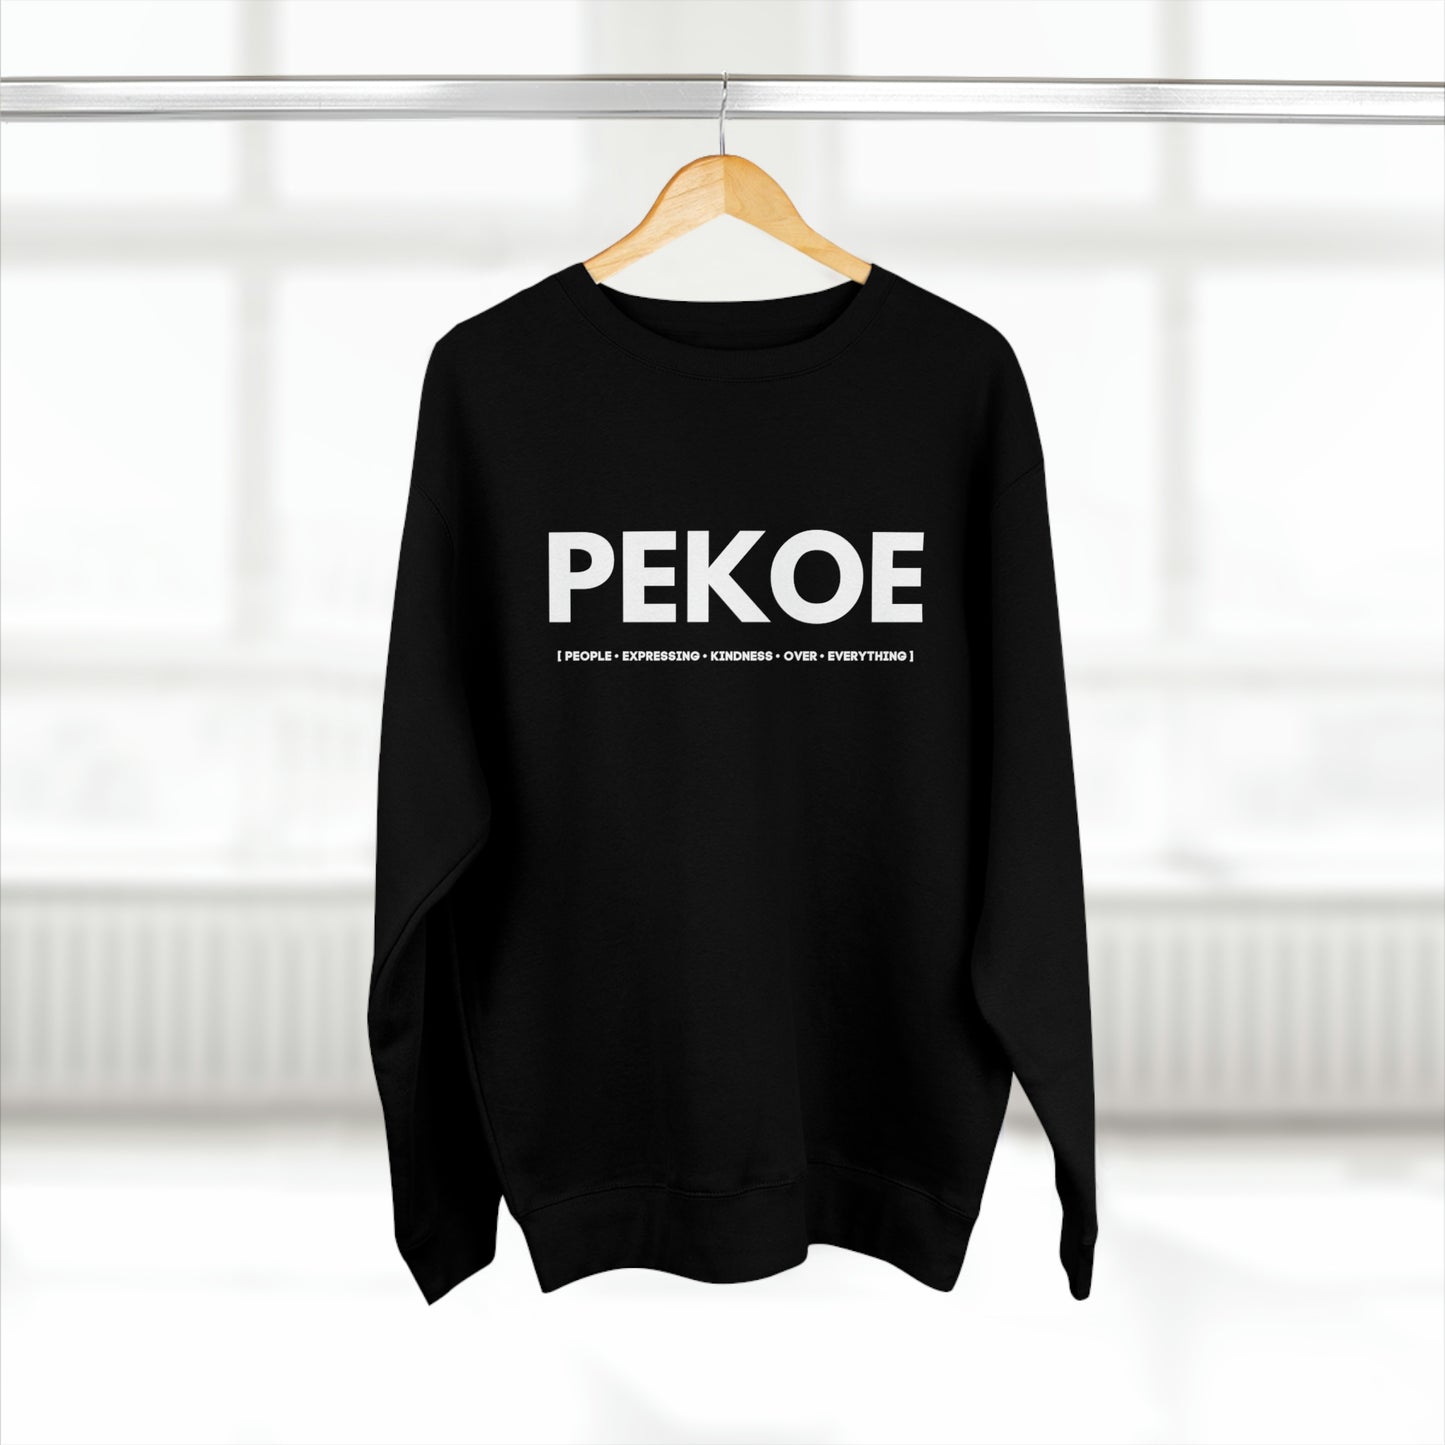 PEKOE - Unisex Premium Crewneck Sweatshirt